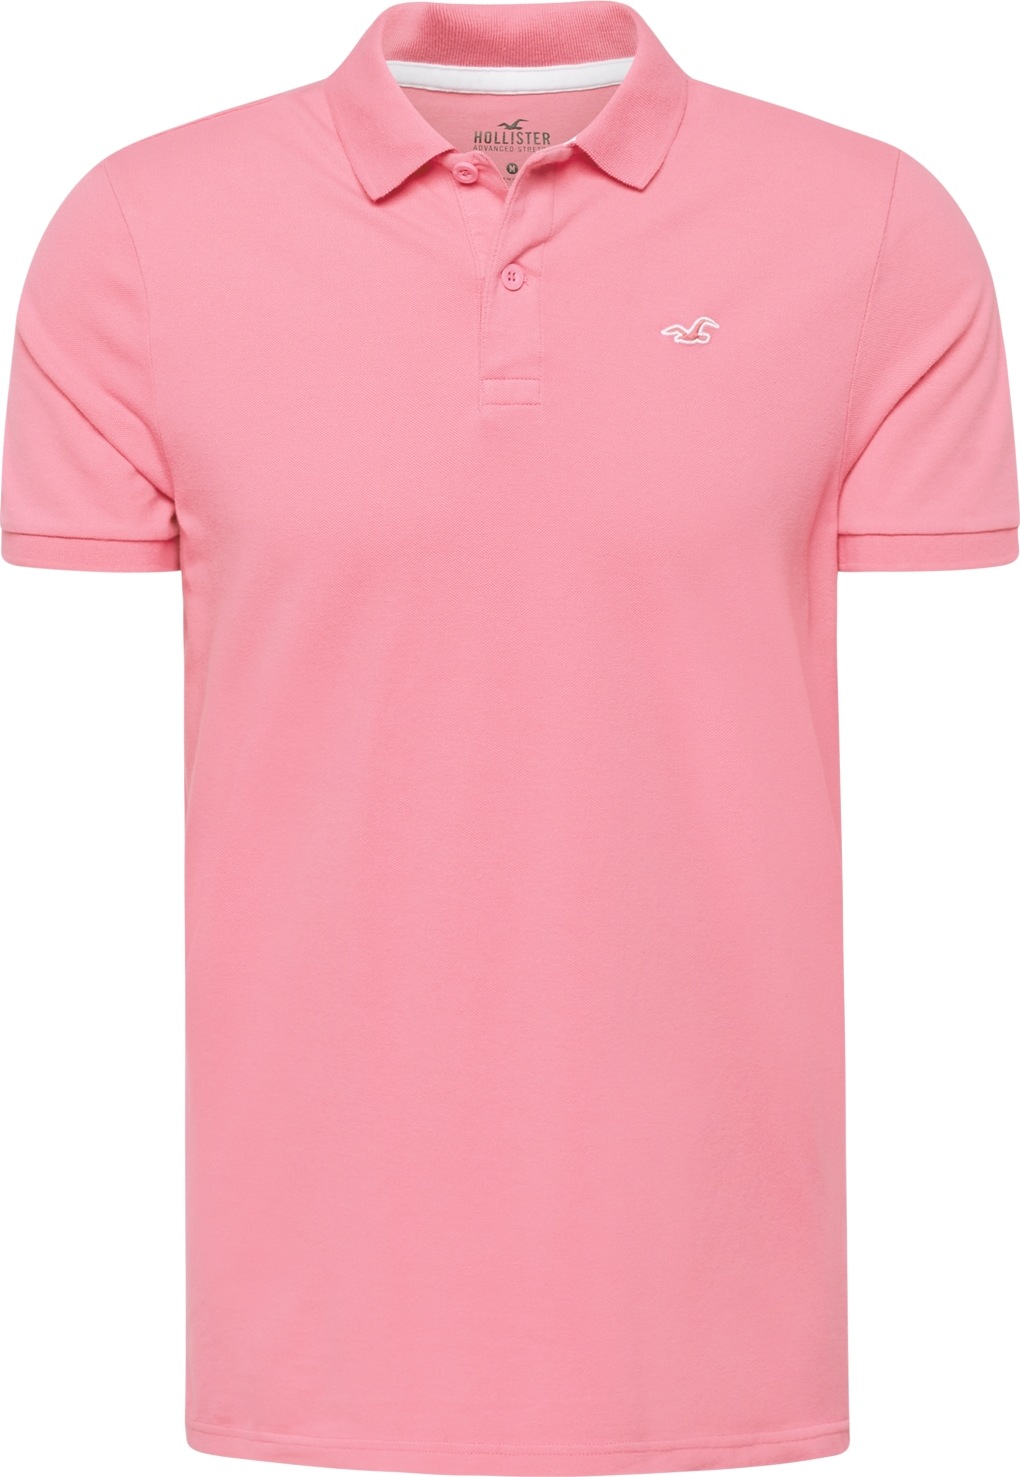 Tričko 'EMEA' Hollister světle růžová / bílá